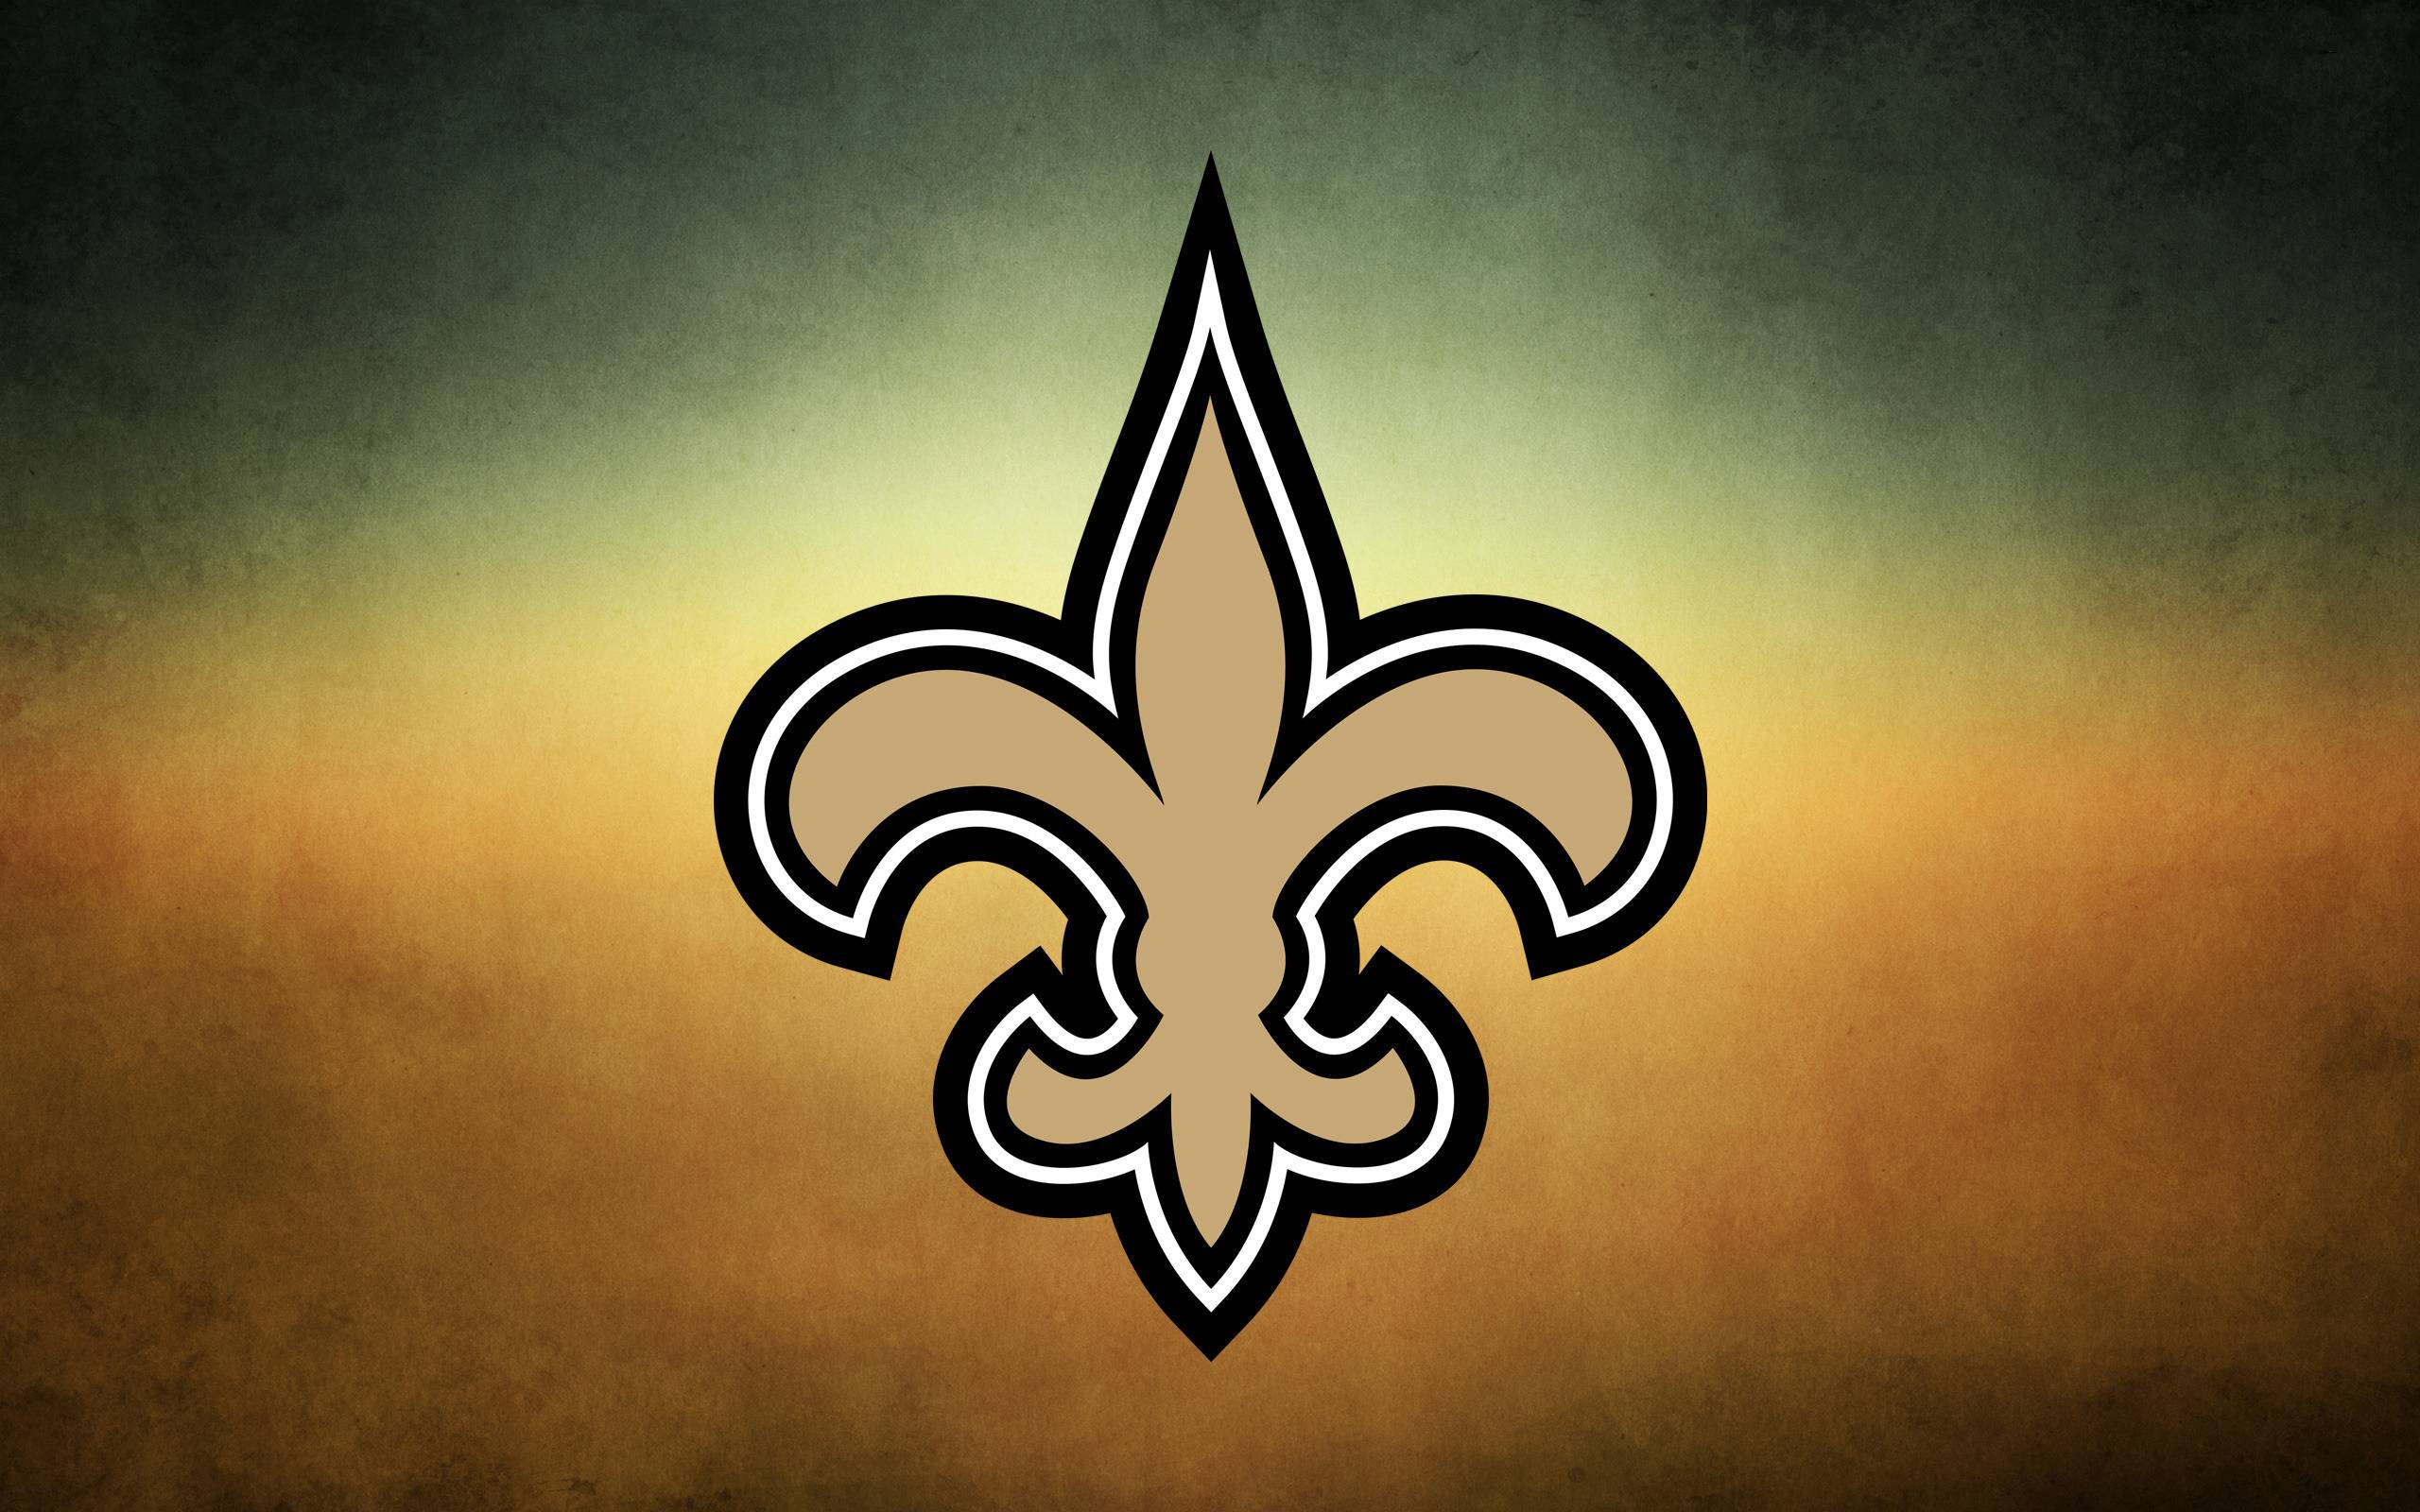 New Orleans Saints 2014 NFL Logo Wallpaper Wide or HD. Sports